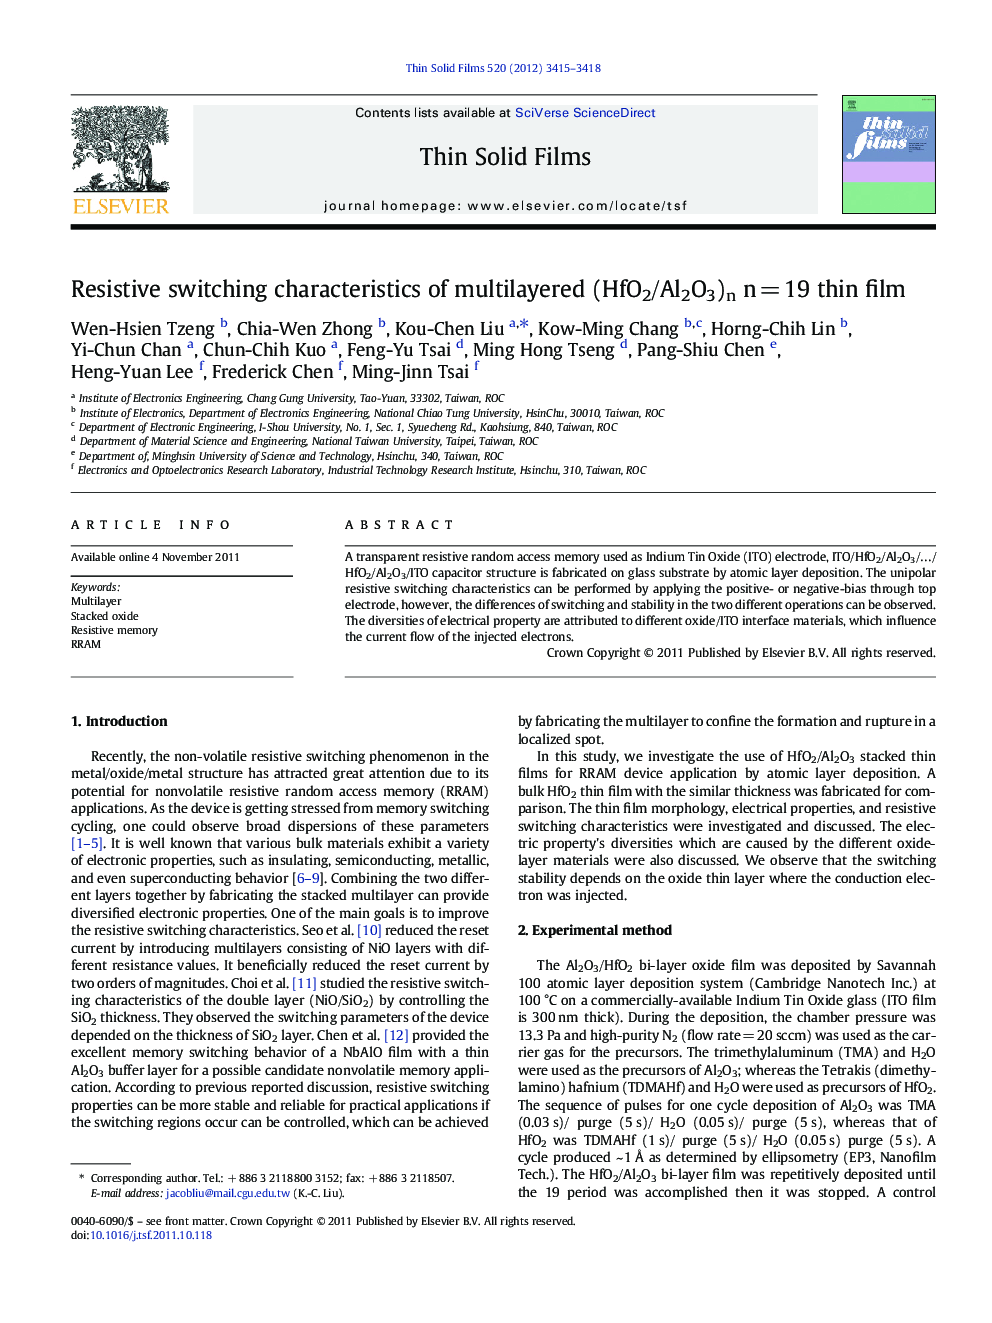 Resistive switching characteristics of multilayered (HfO2/Al2O3)n n = 19 thin film